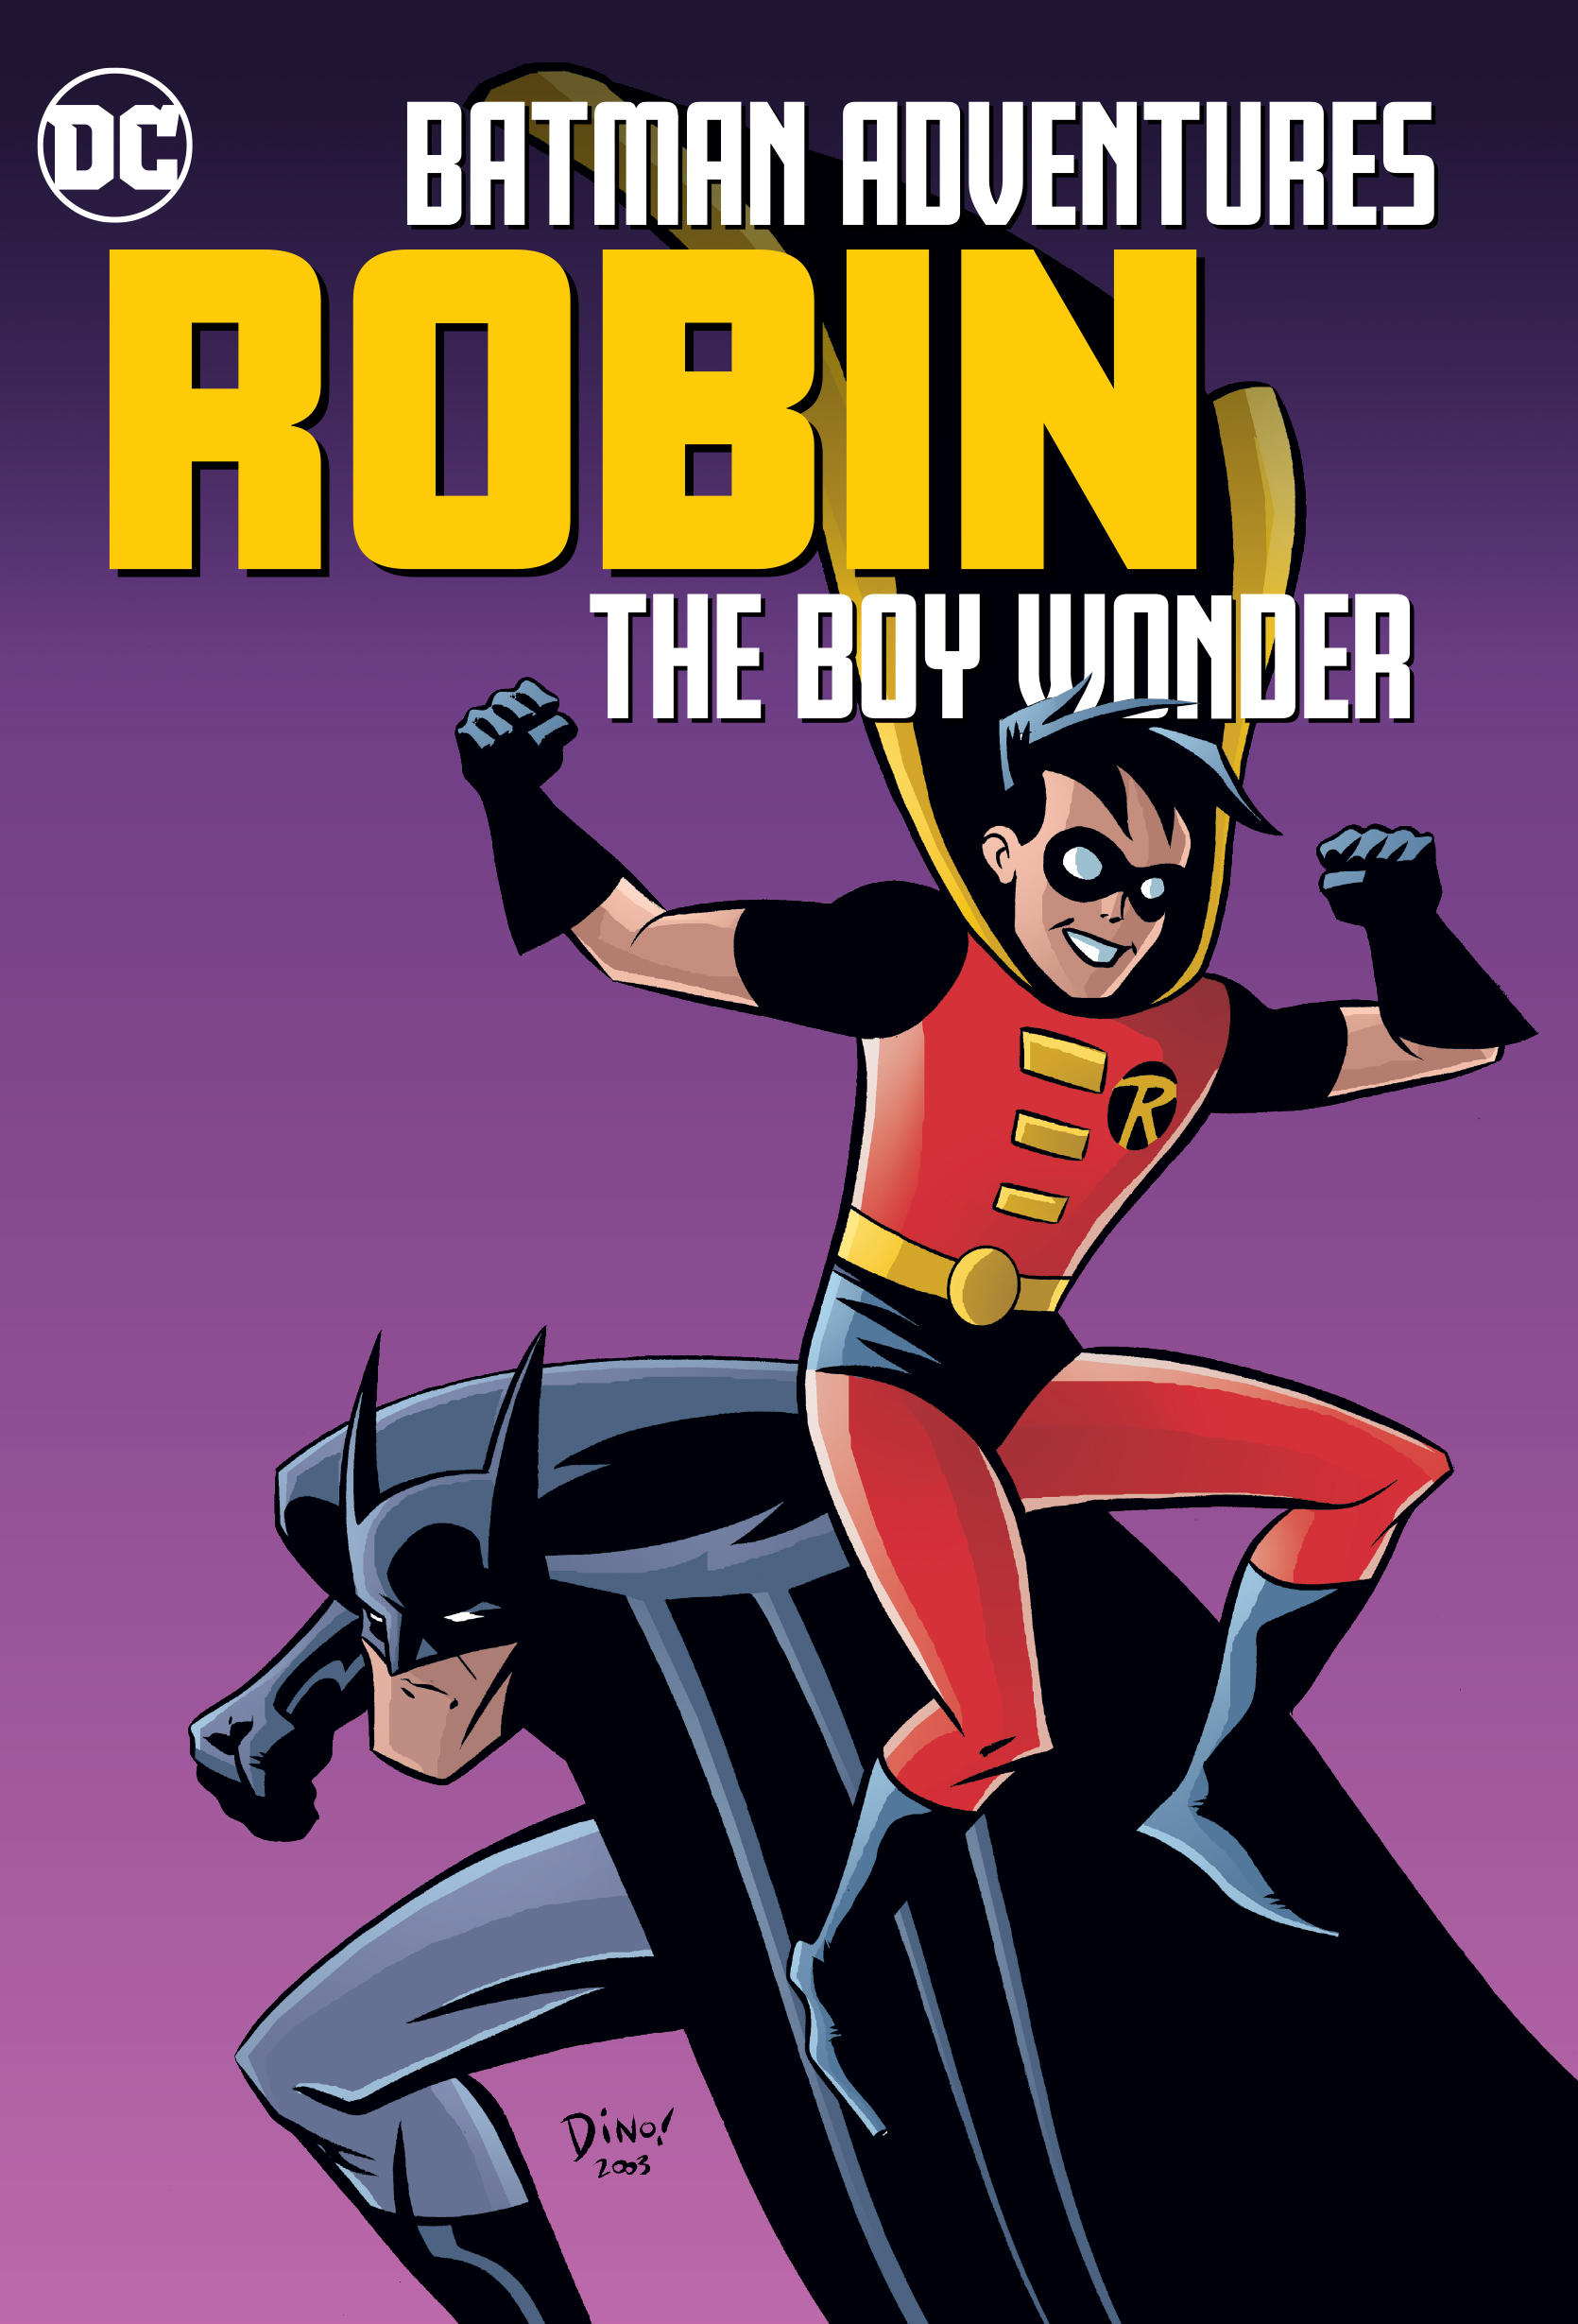 Batman Adventures Robin the Boy Wonder Graphic Novel